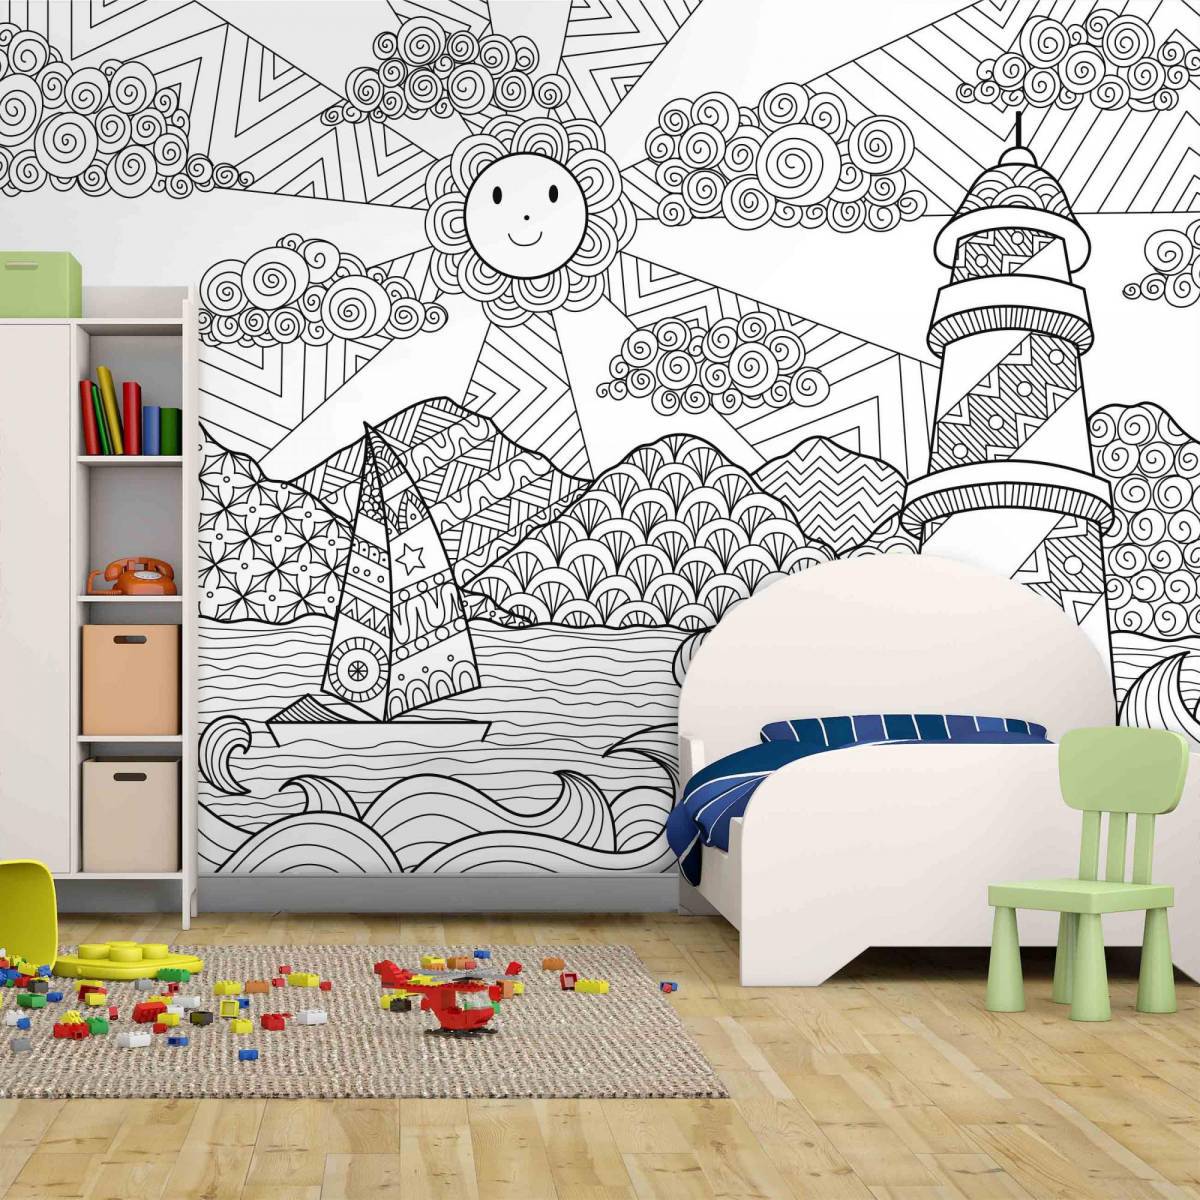 Stylish coloring wallpaper